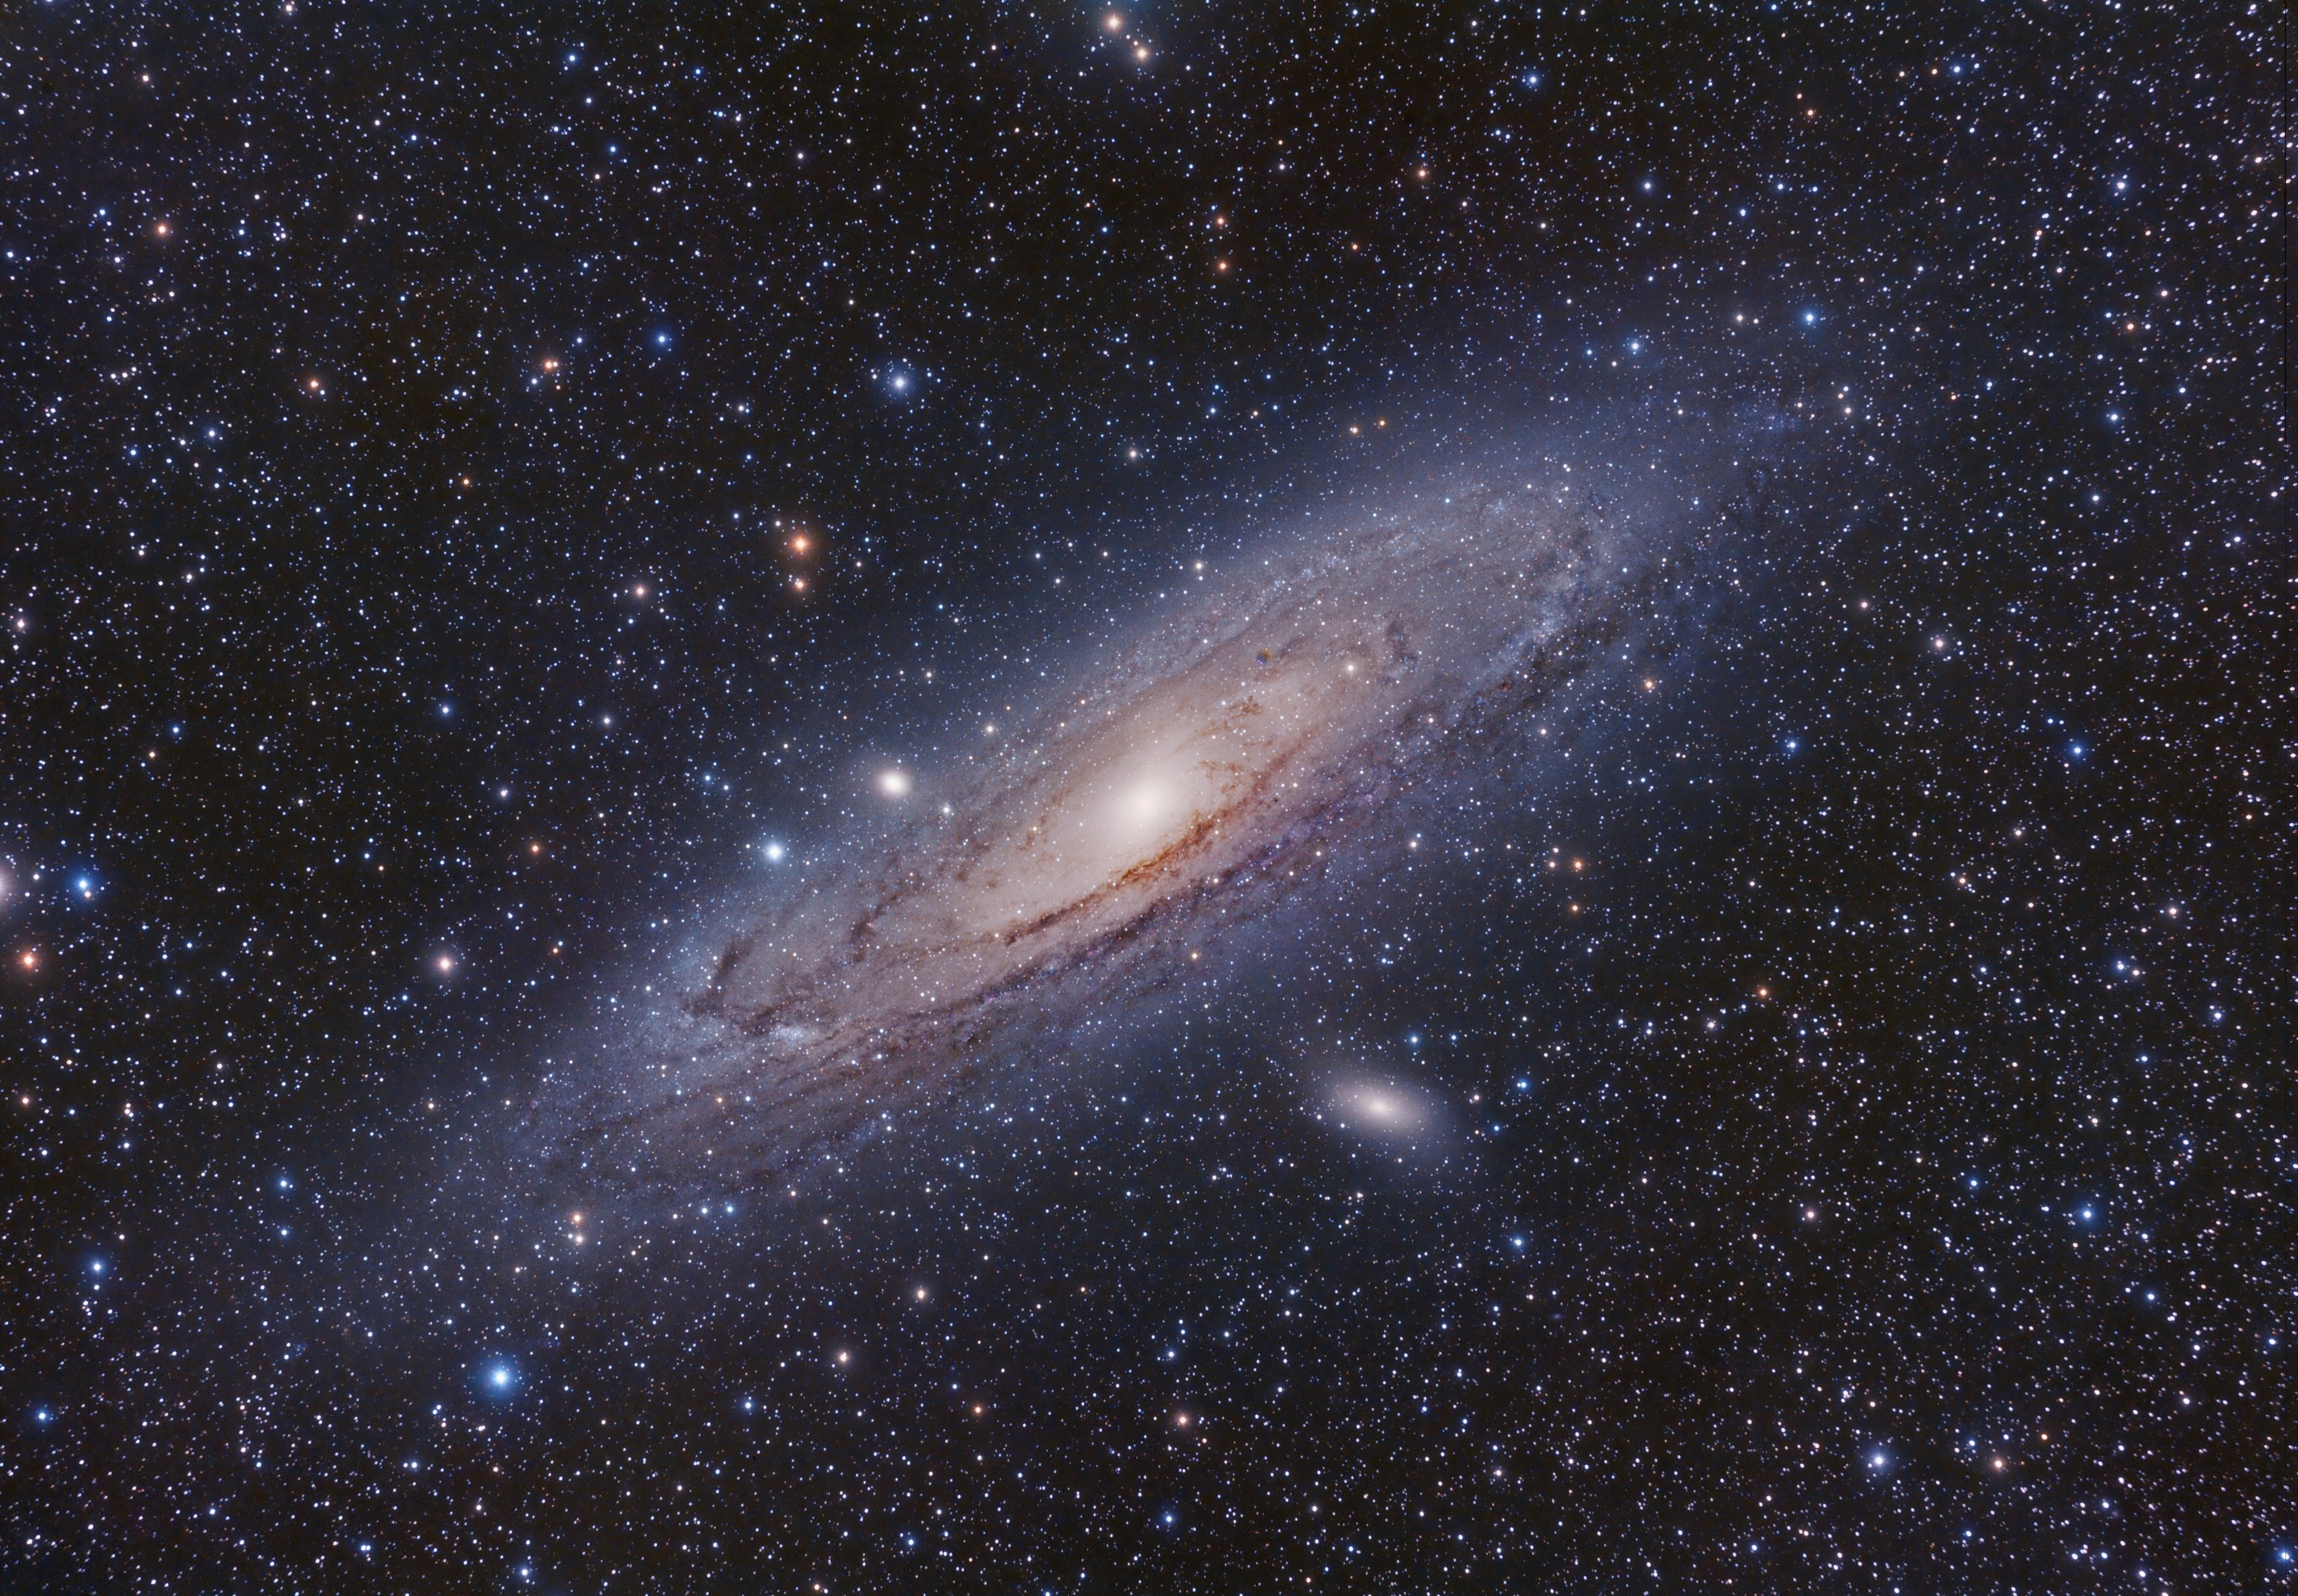 elliptical galaxy images